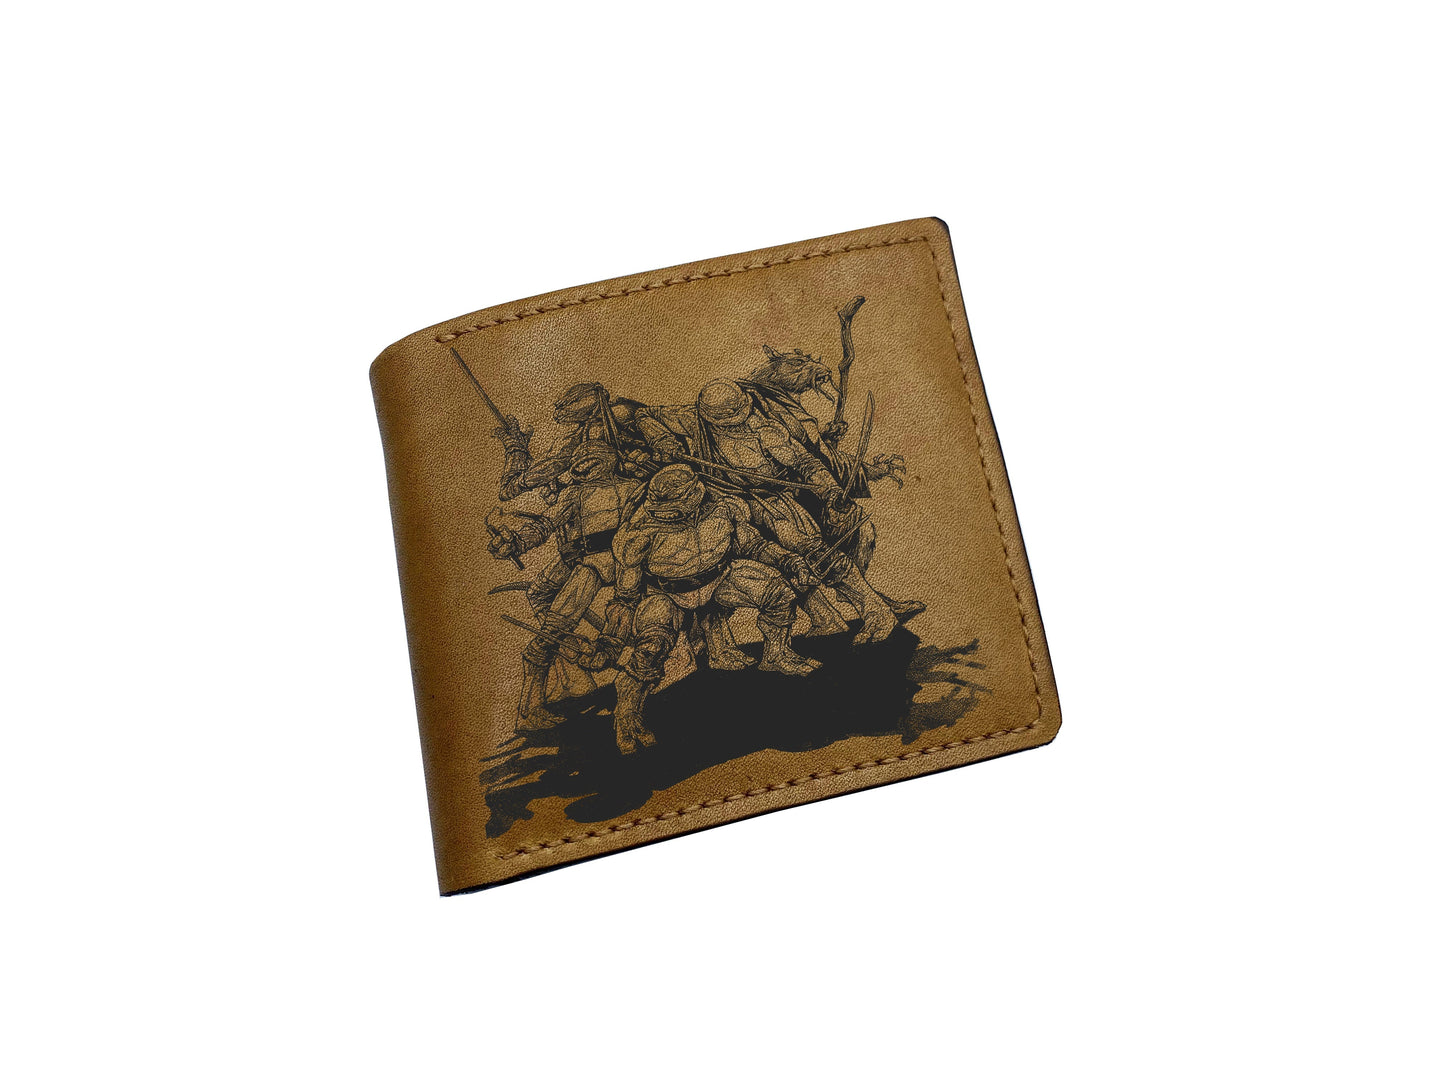 Mayan Corner - Personalized genuine leather handmade wallet, leather gift ideas for him, ninja turtle leather art wallet - Shredder - 01112212